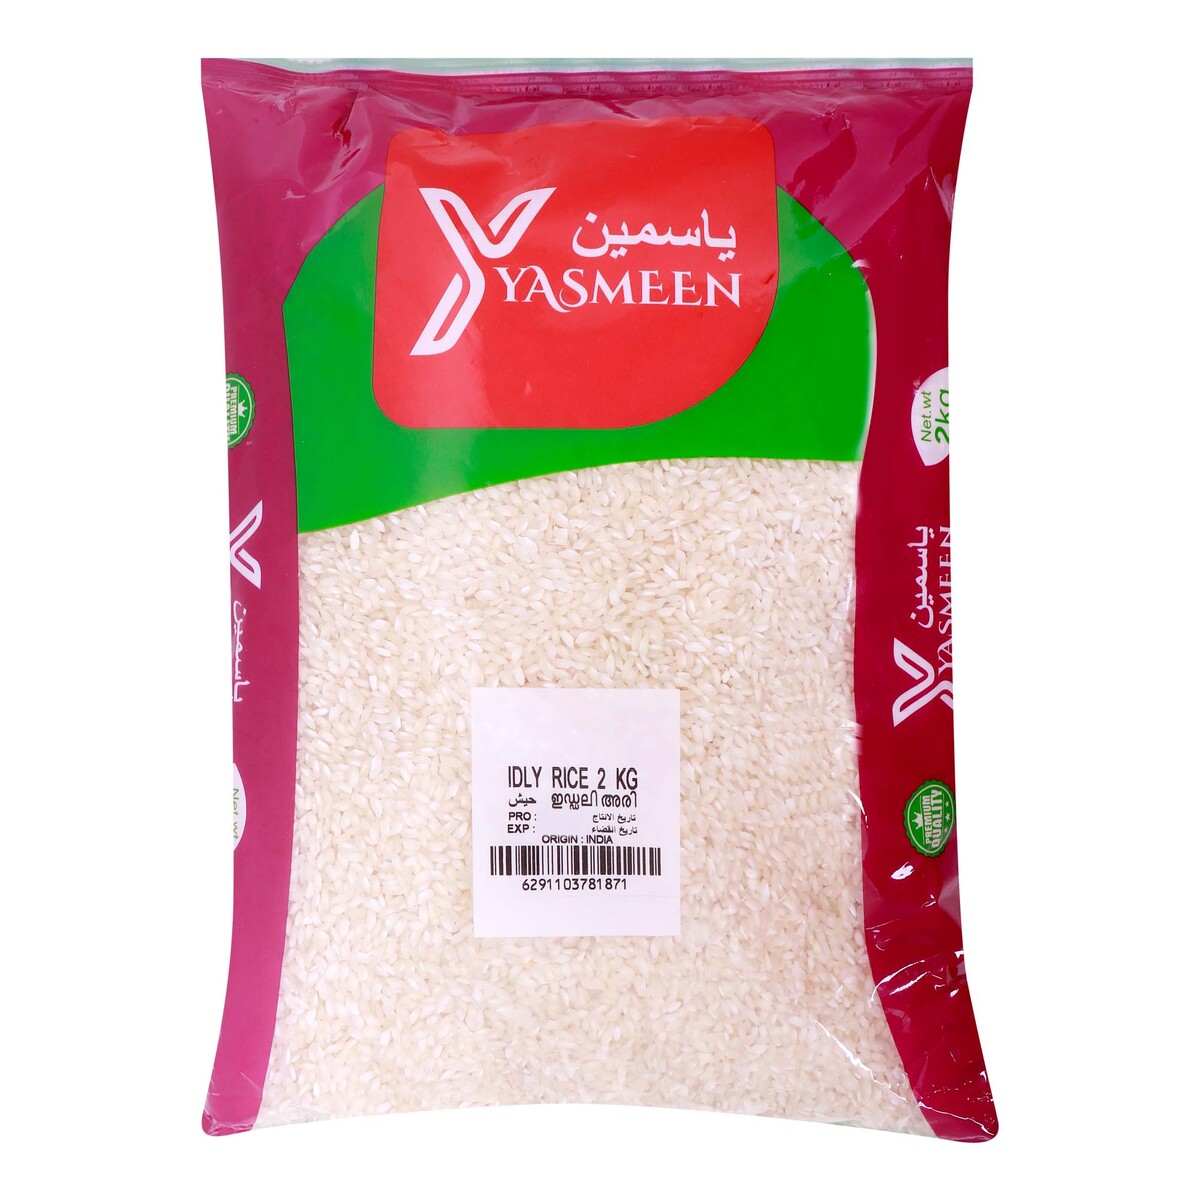 Yasmeen Idly Rice, 2 kg